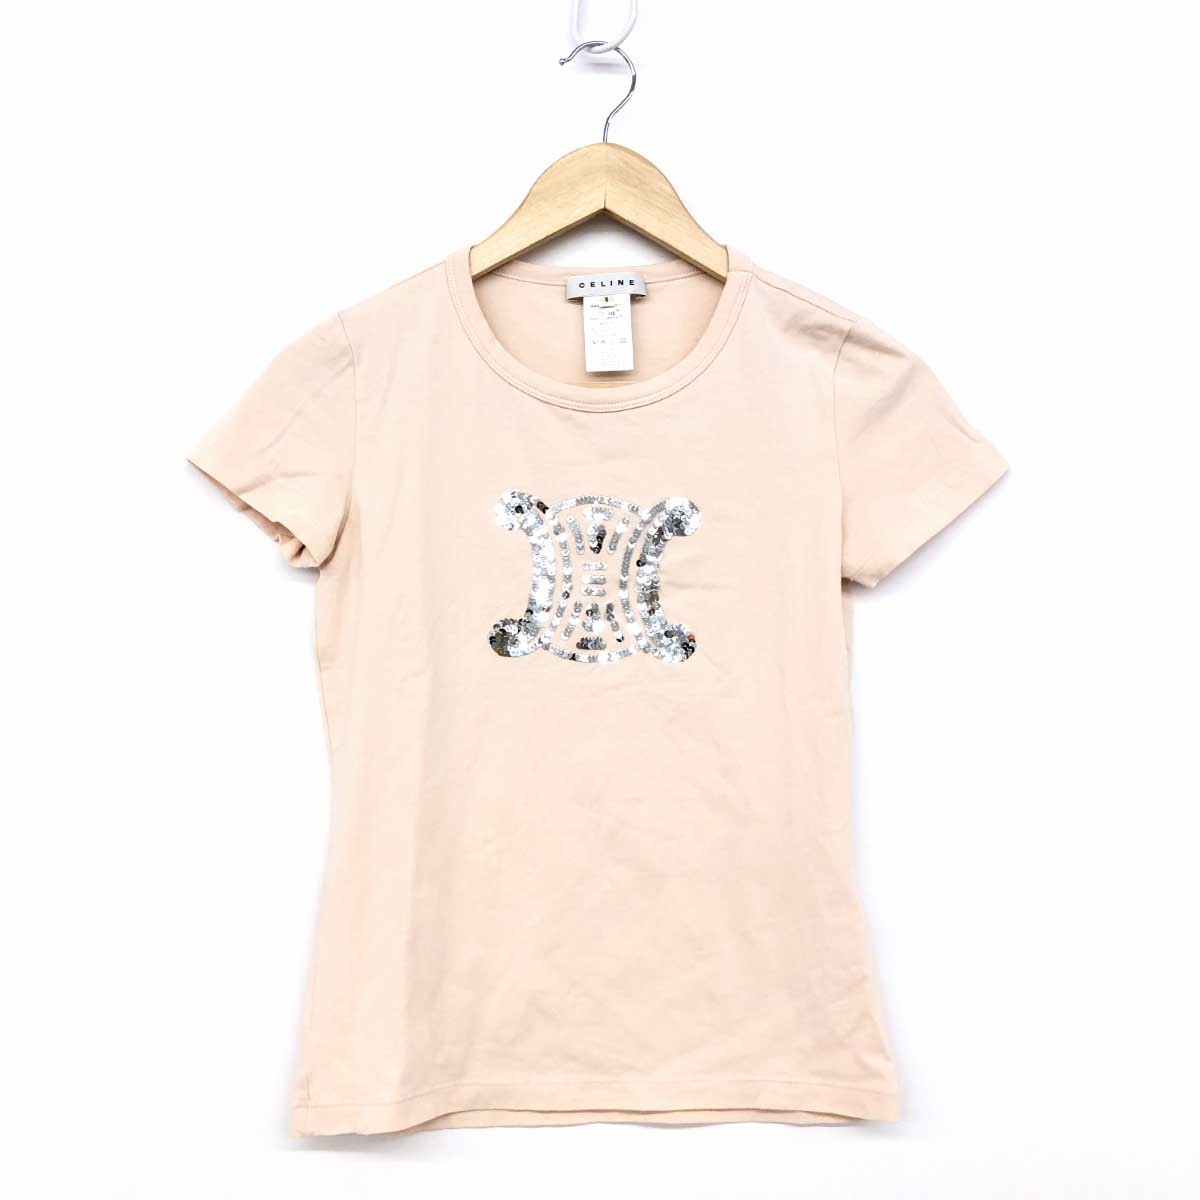 ◆CELINE セリーヌ 半袖Tシャツ サイズS◆ ピンク コットン レディース トップス マカダム スパンコール